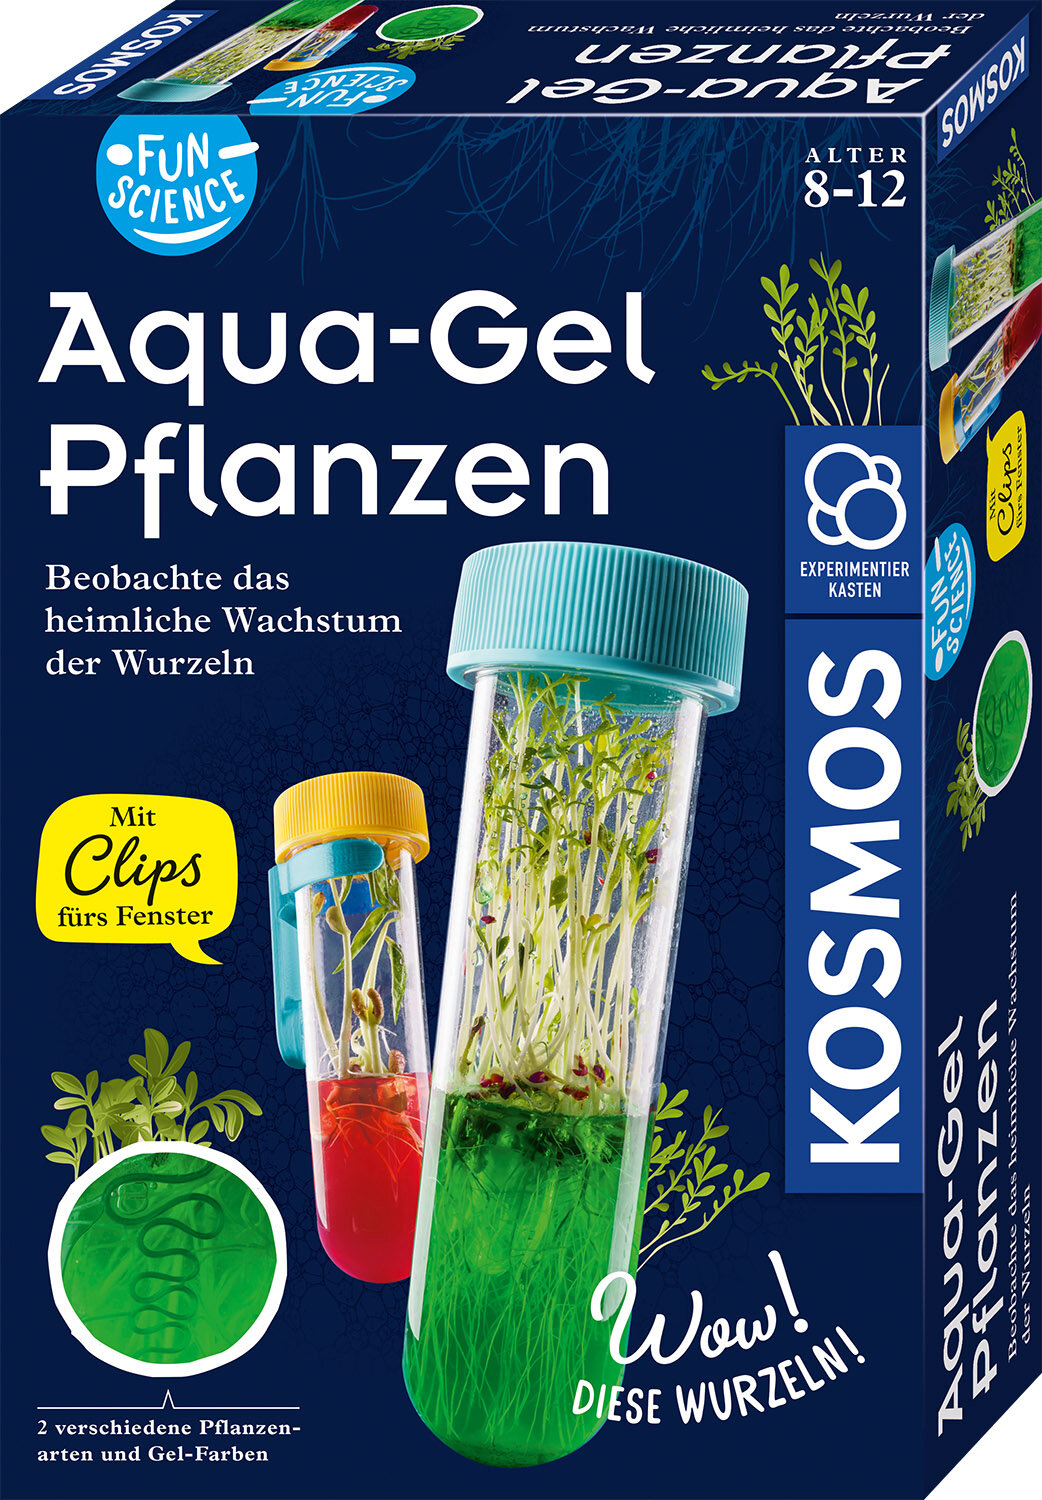 Fun Science Aqua-Gel-Pflanzen